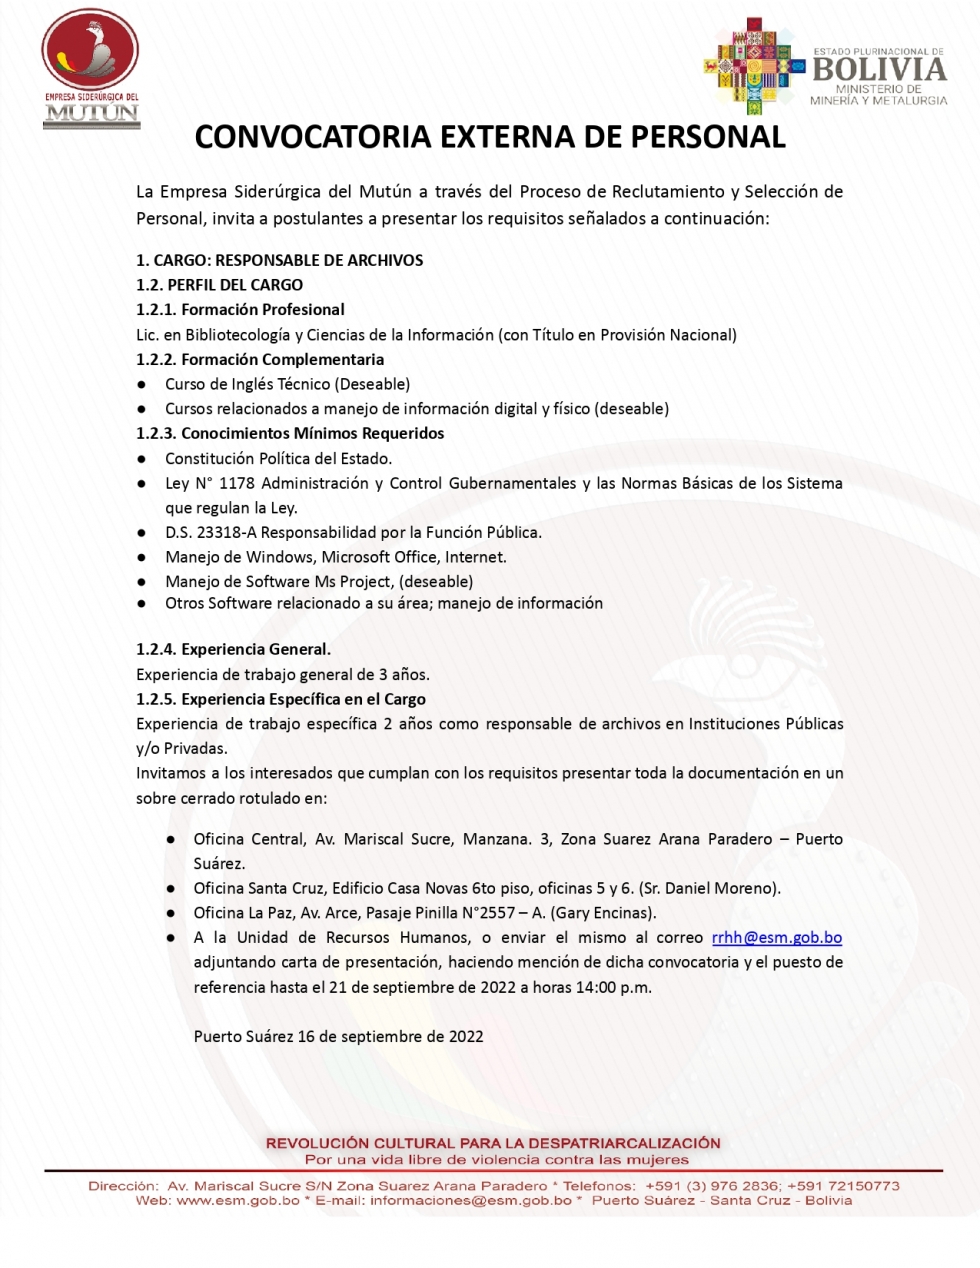 CONVOCATORIA PARA RESPONSABLE DE ARCHIVOS  - Empresa Siderúrgica del Mutún